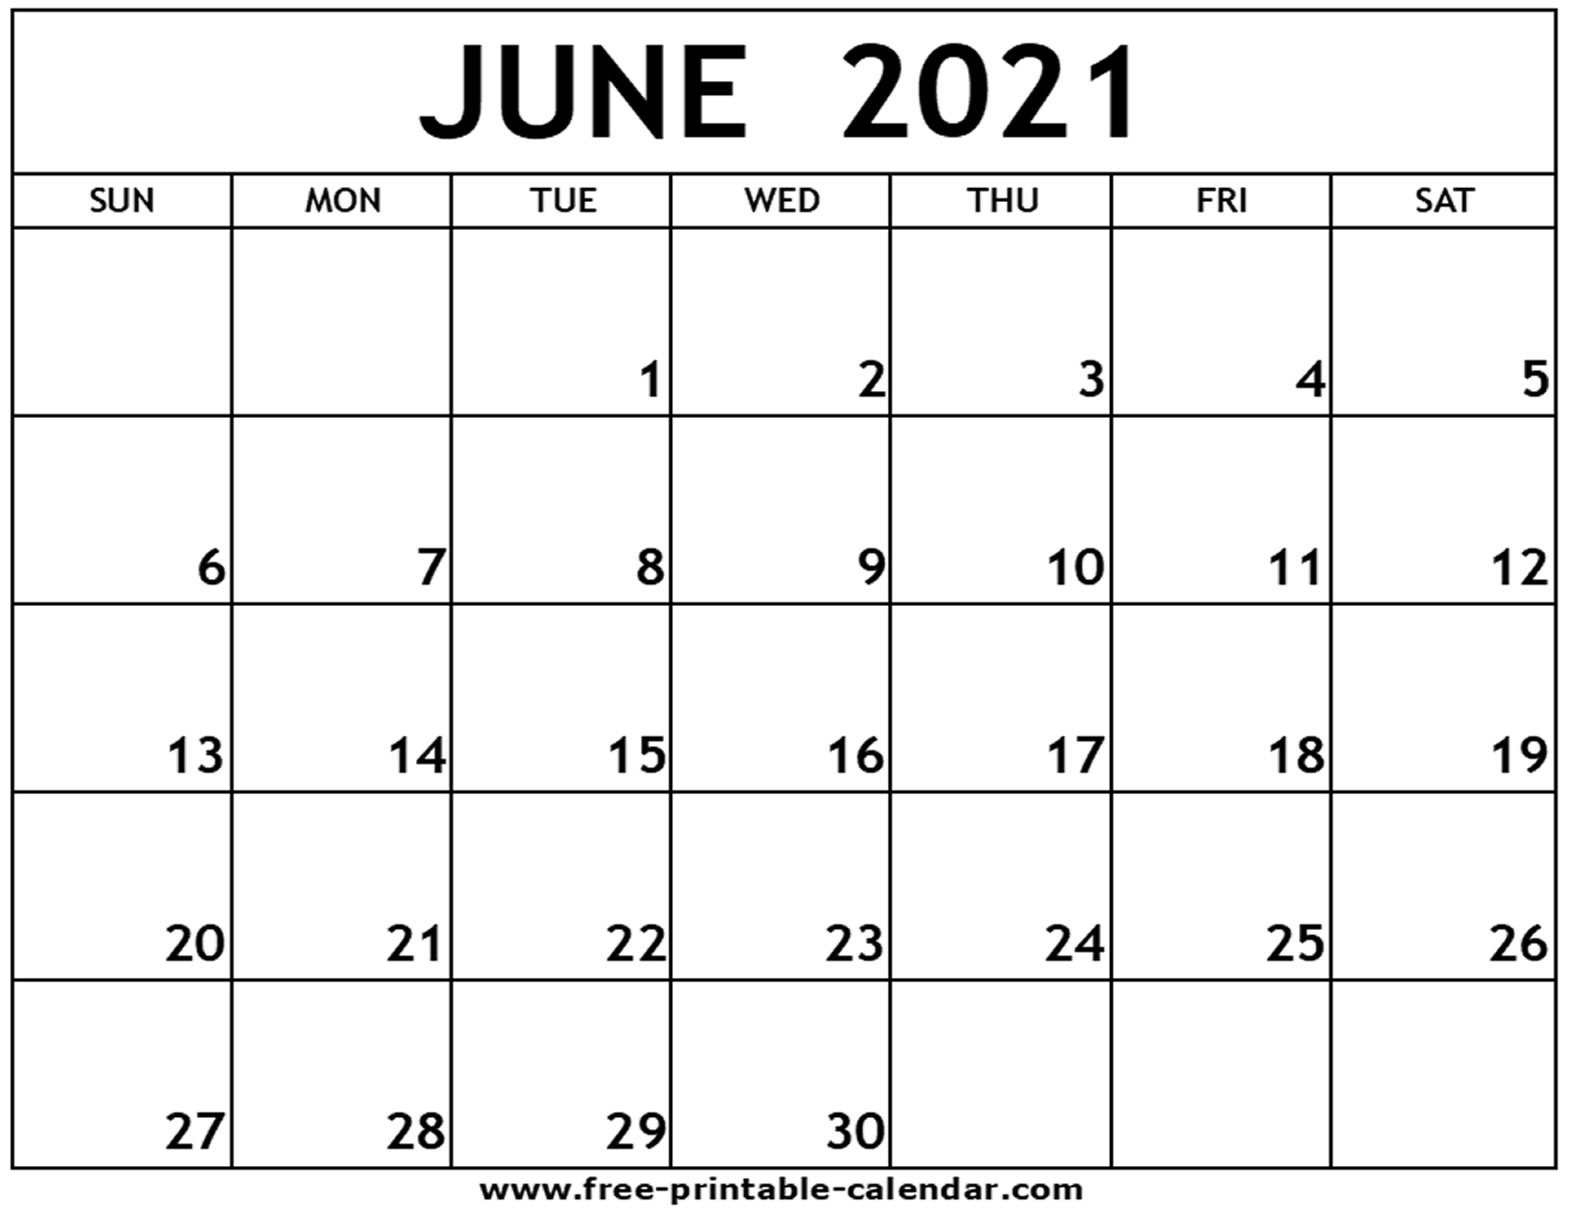 June 2021 Printable Calendar - Free-Printable-Calendar Printable Calendar 2021